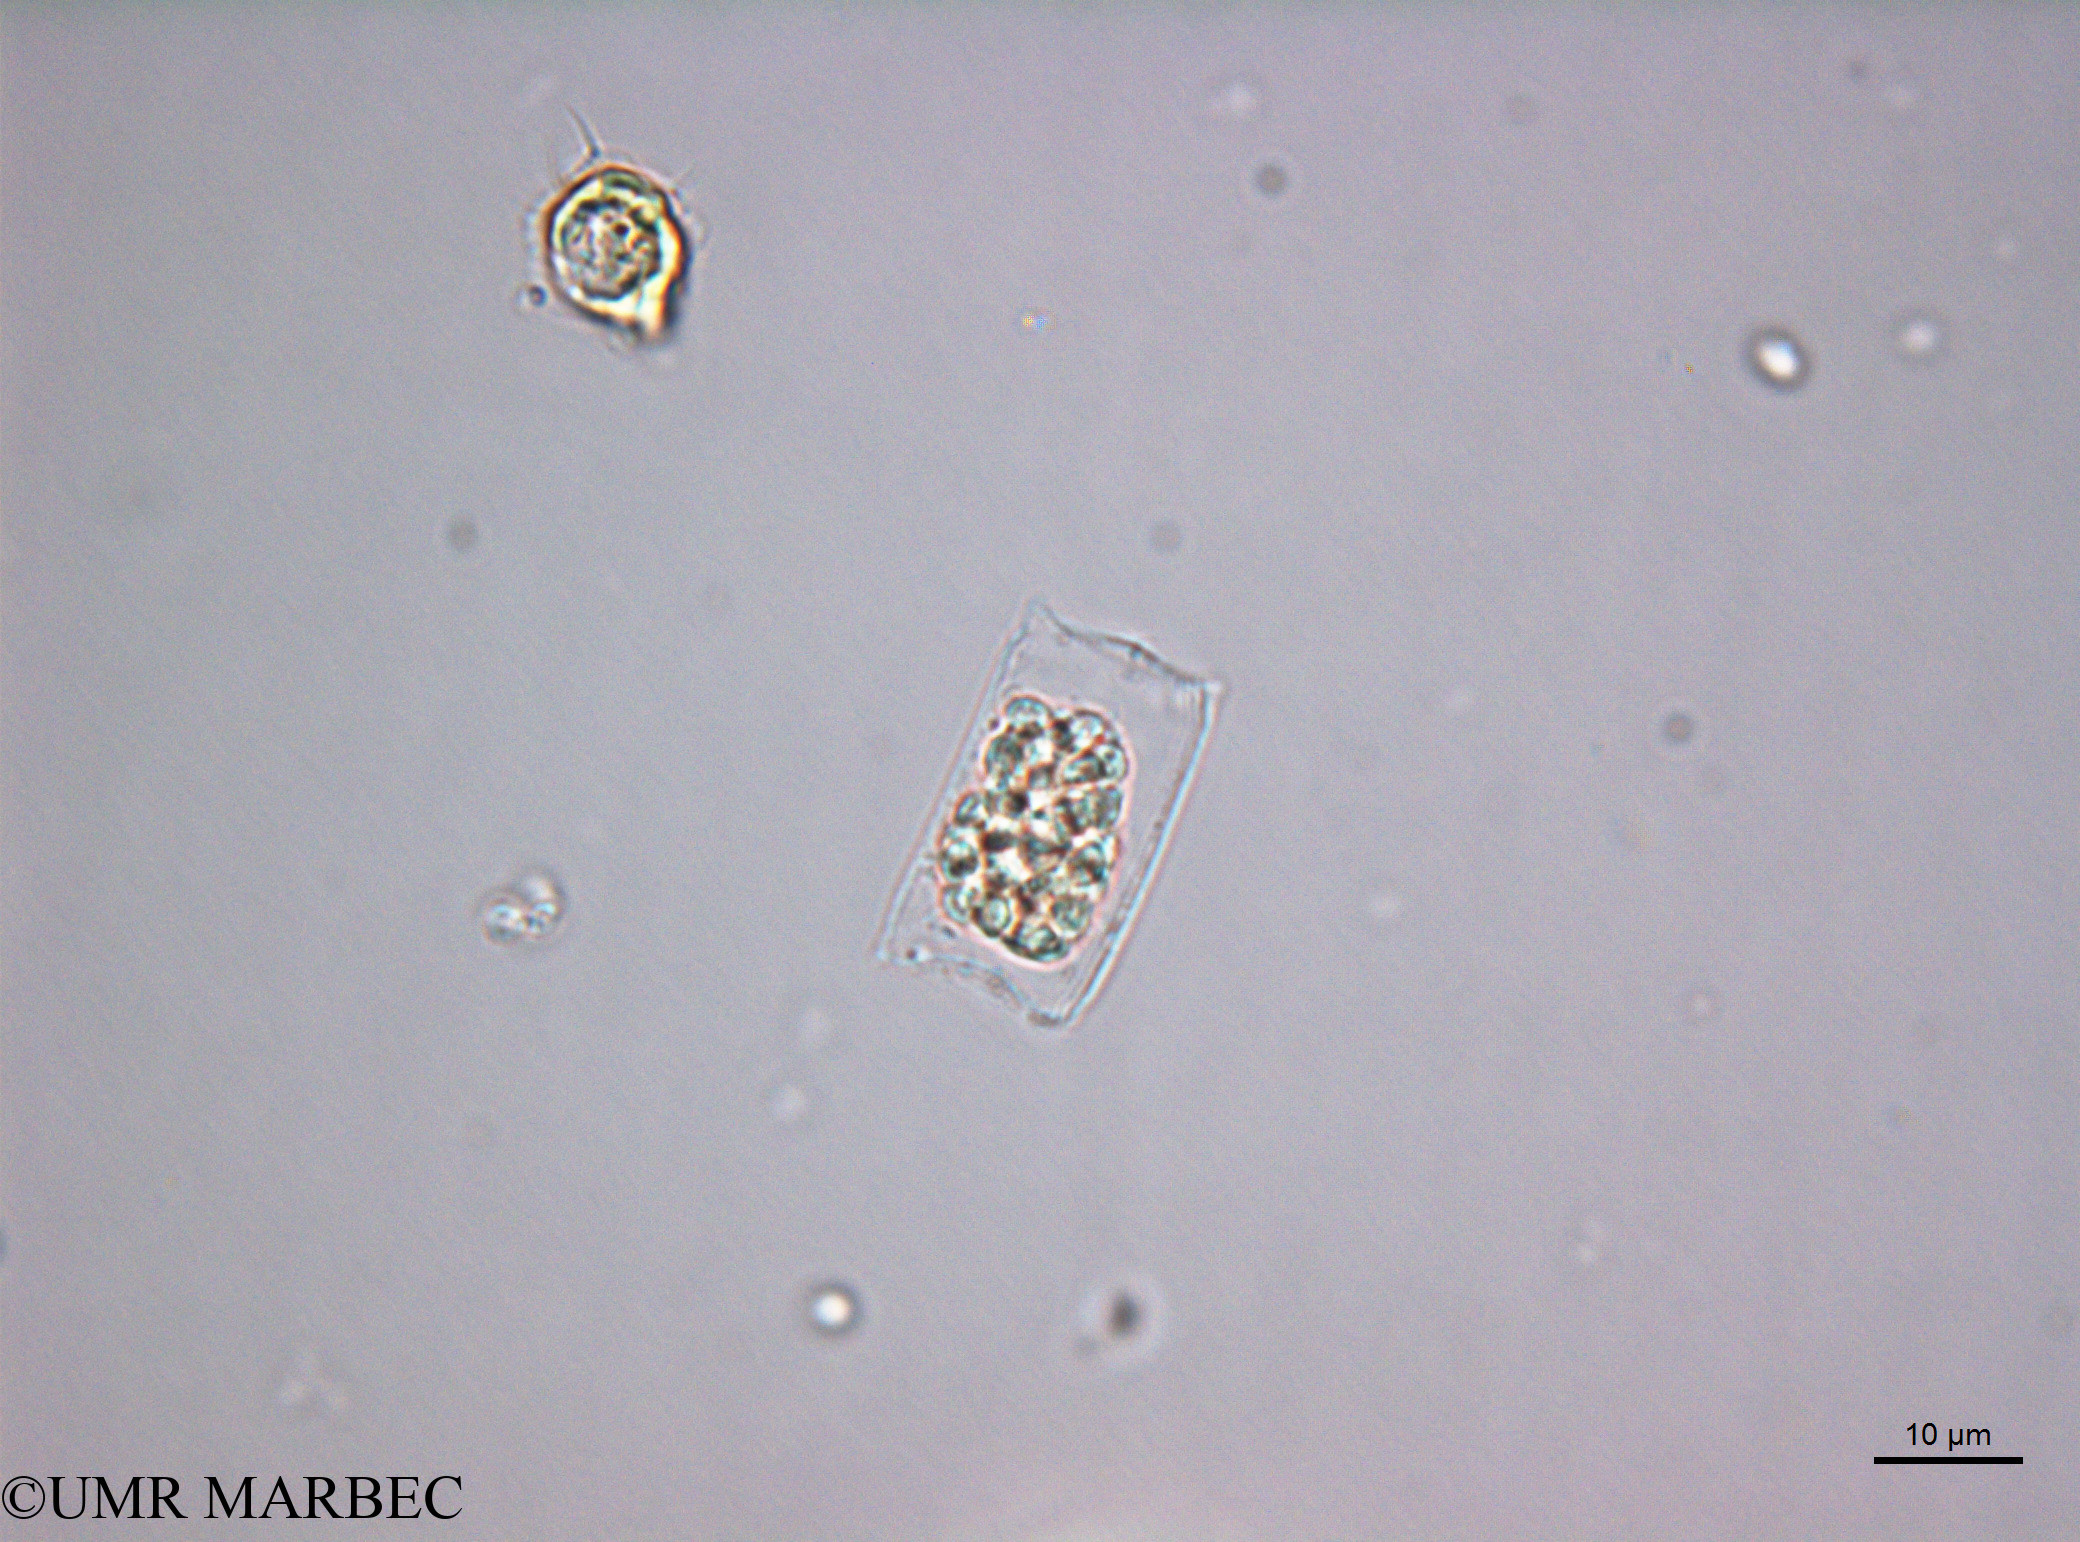 phyto/Scattered_Islands/juan_de_nova/COMMA2 November 2013/Cerataulina sp1 (D5_2_diatomee_ancien_melosira180717_001_ovl-32)(copy).jpg